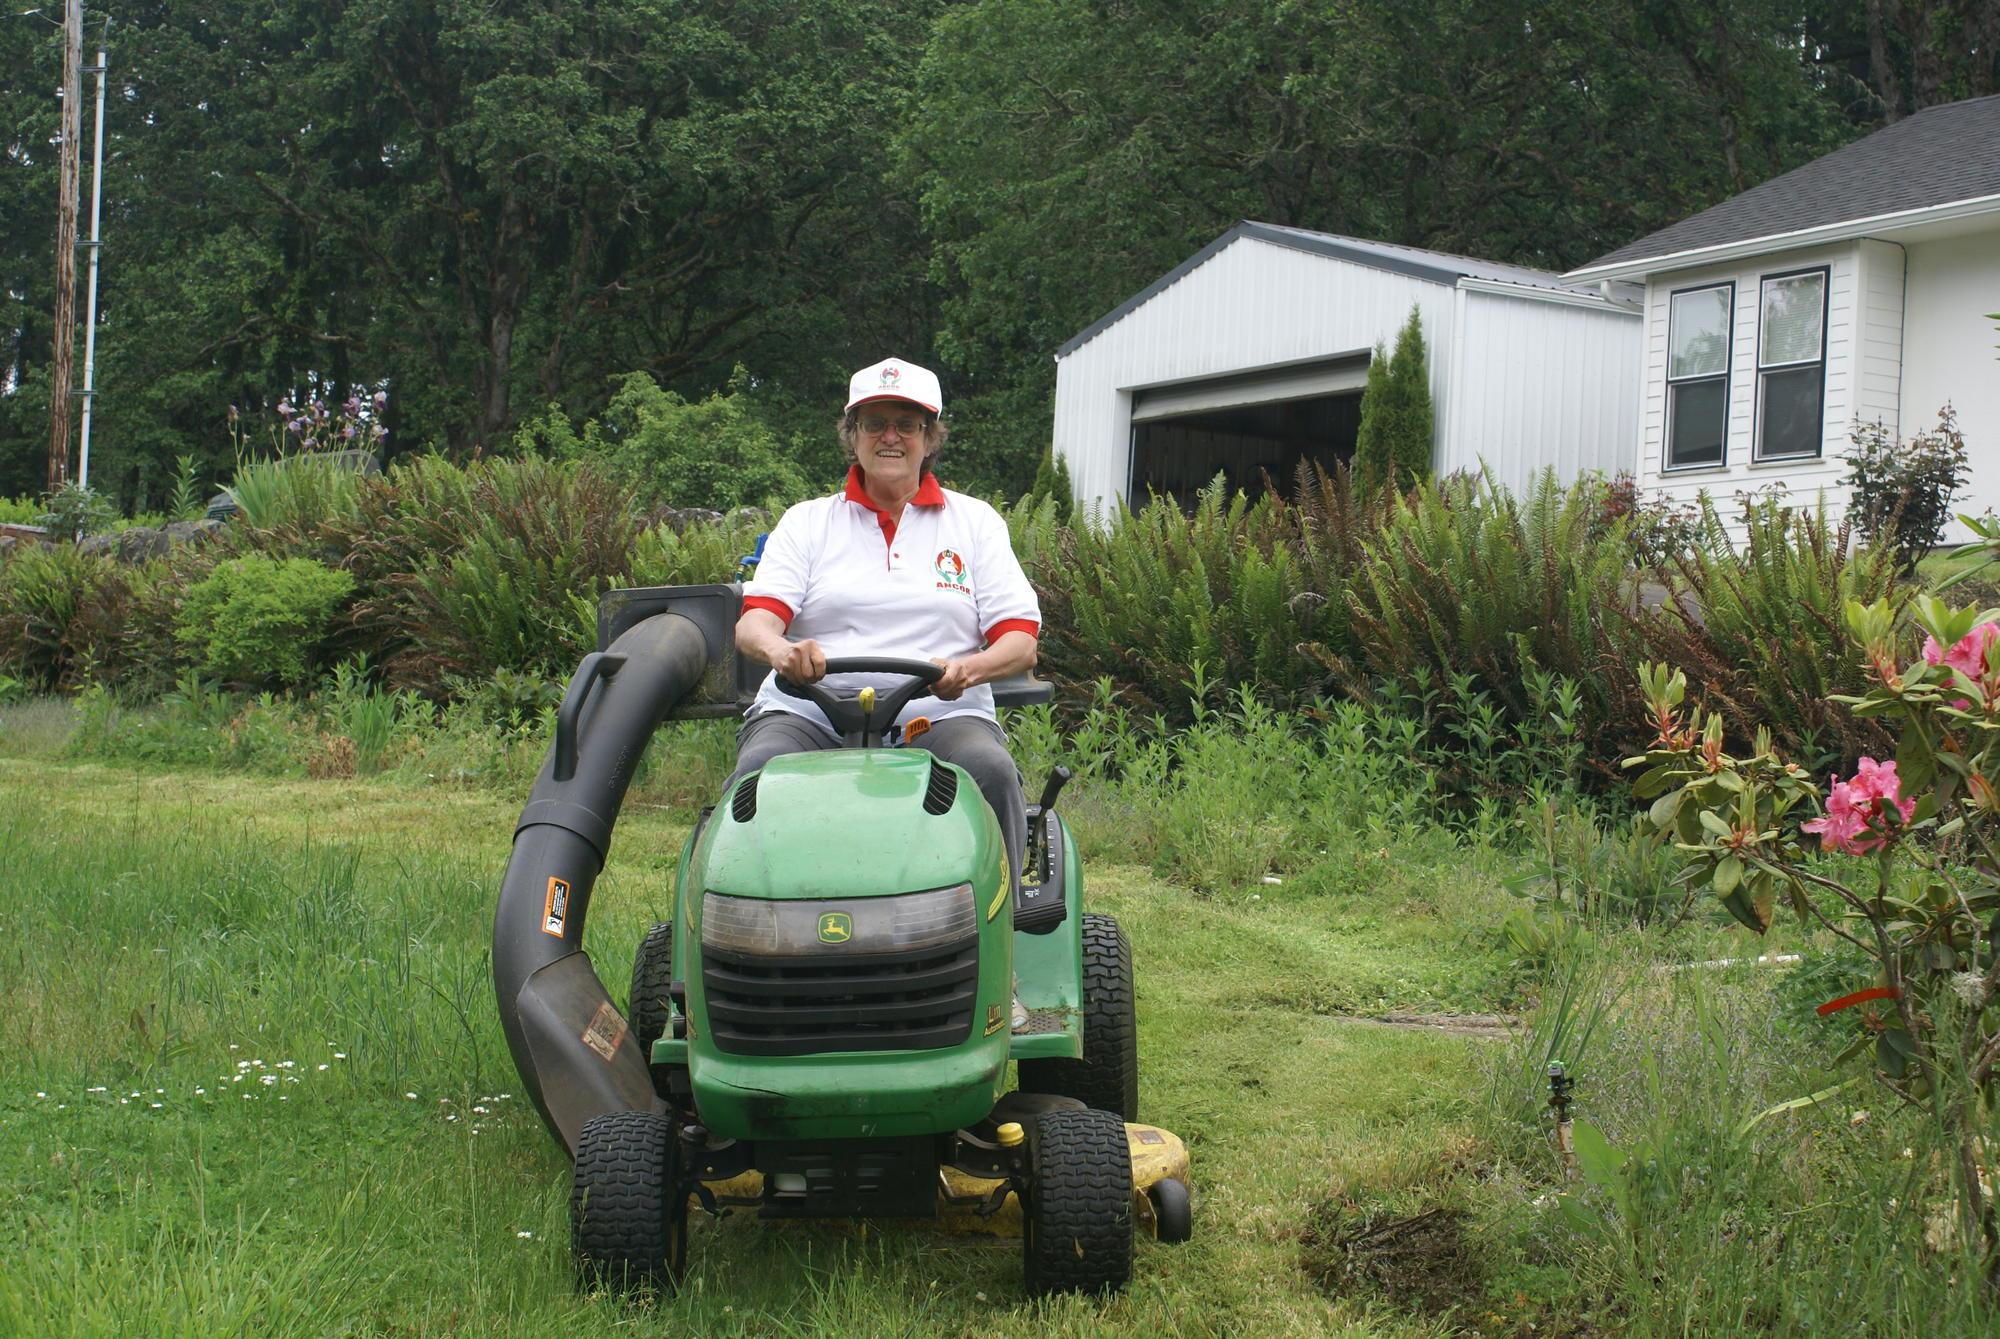 Woman wearing a ballcap riding a lawn tractor.